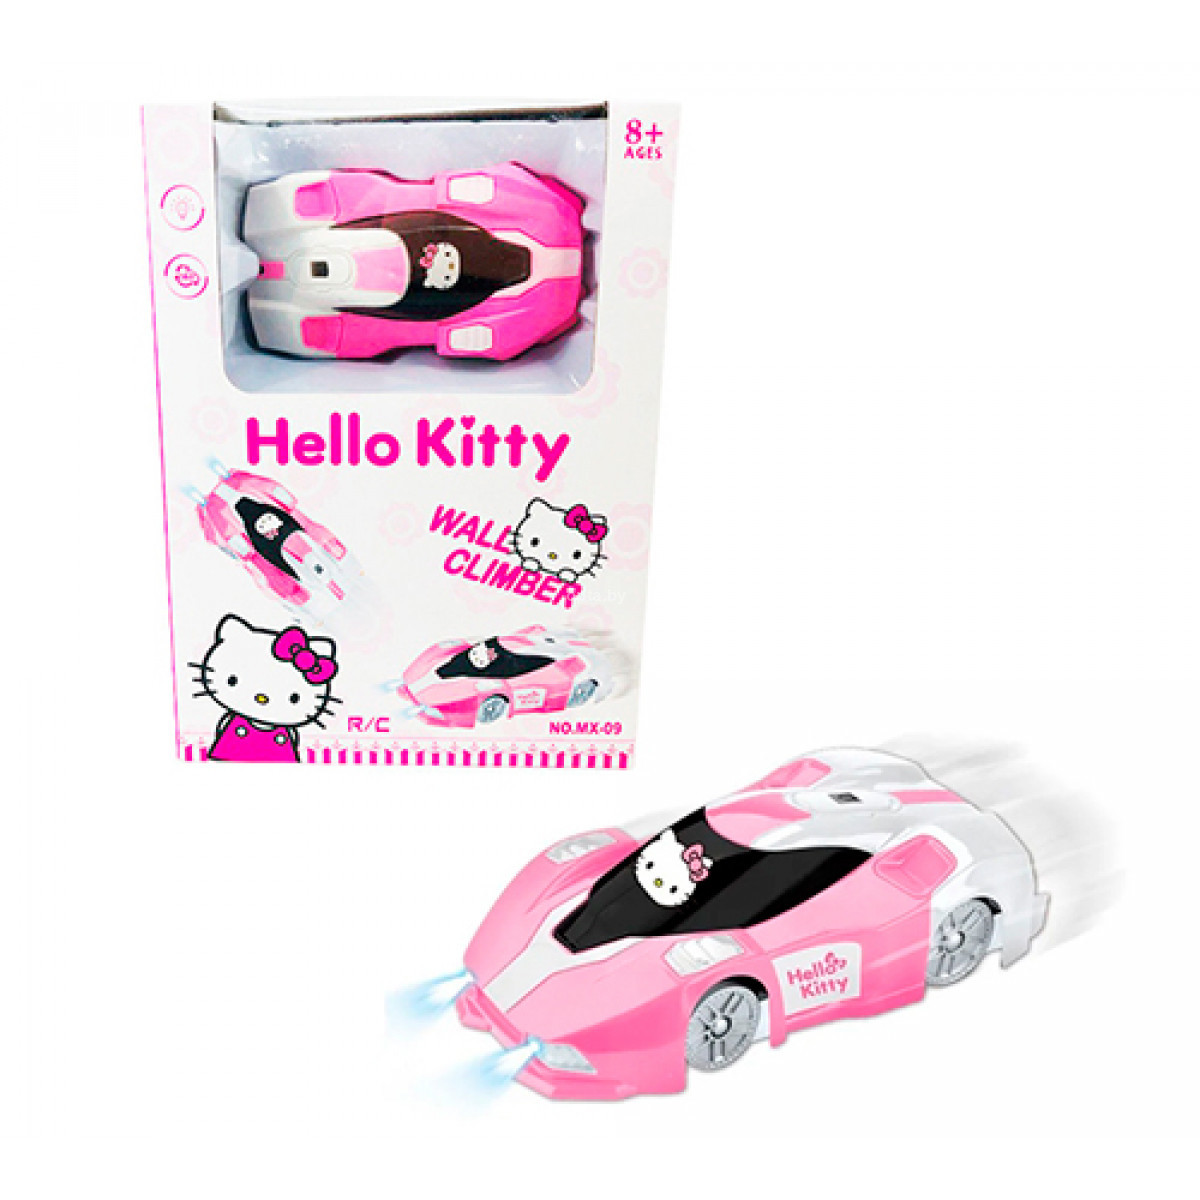 Антигравитационная машинка "Hello Kitty", фото 1